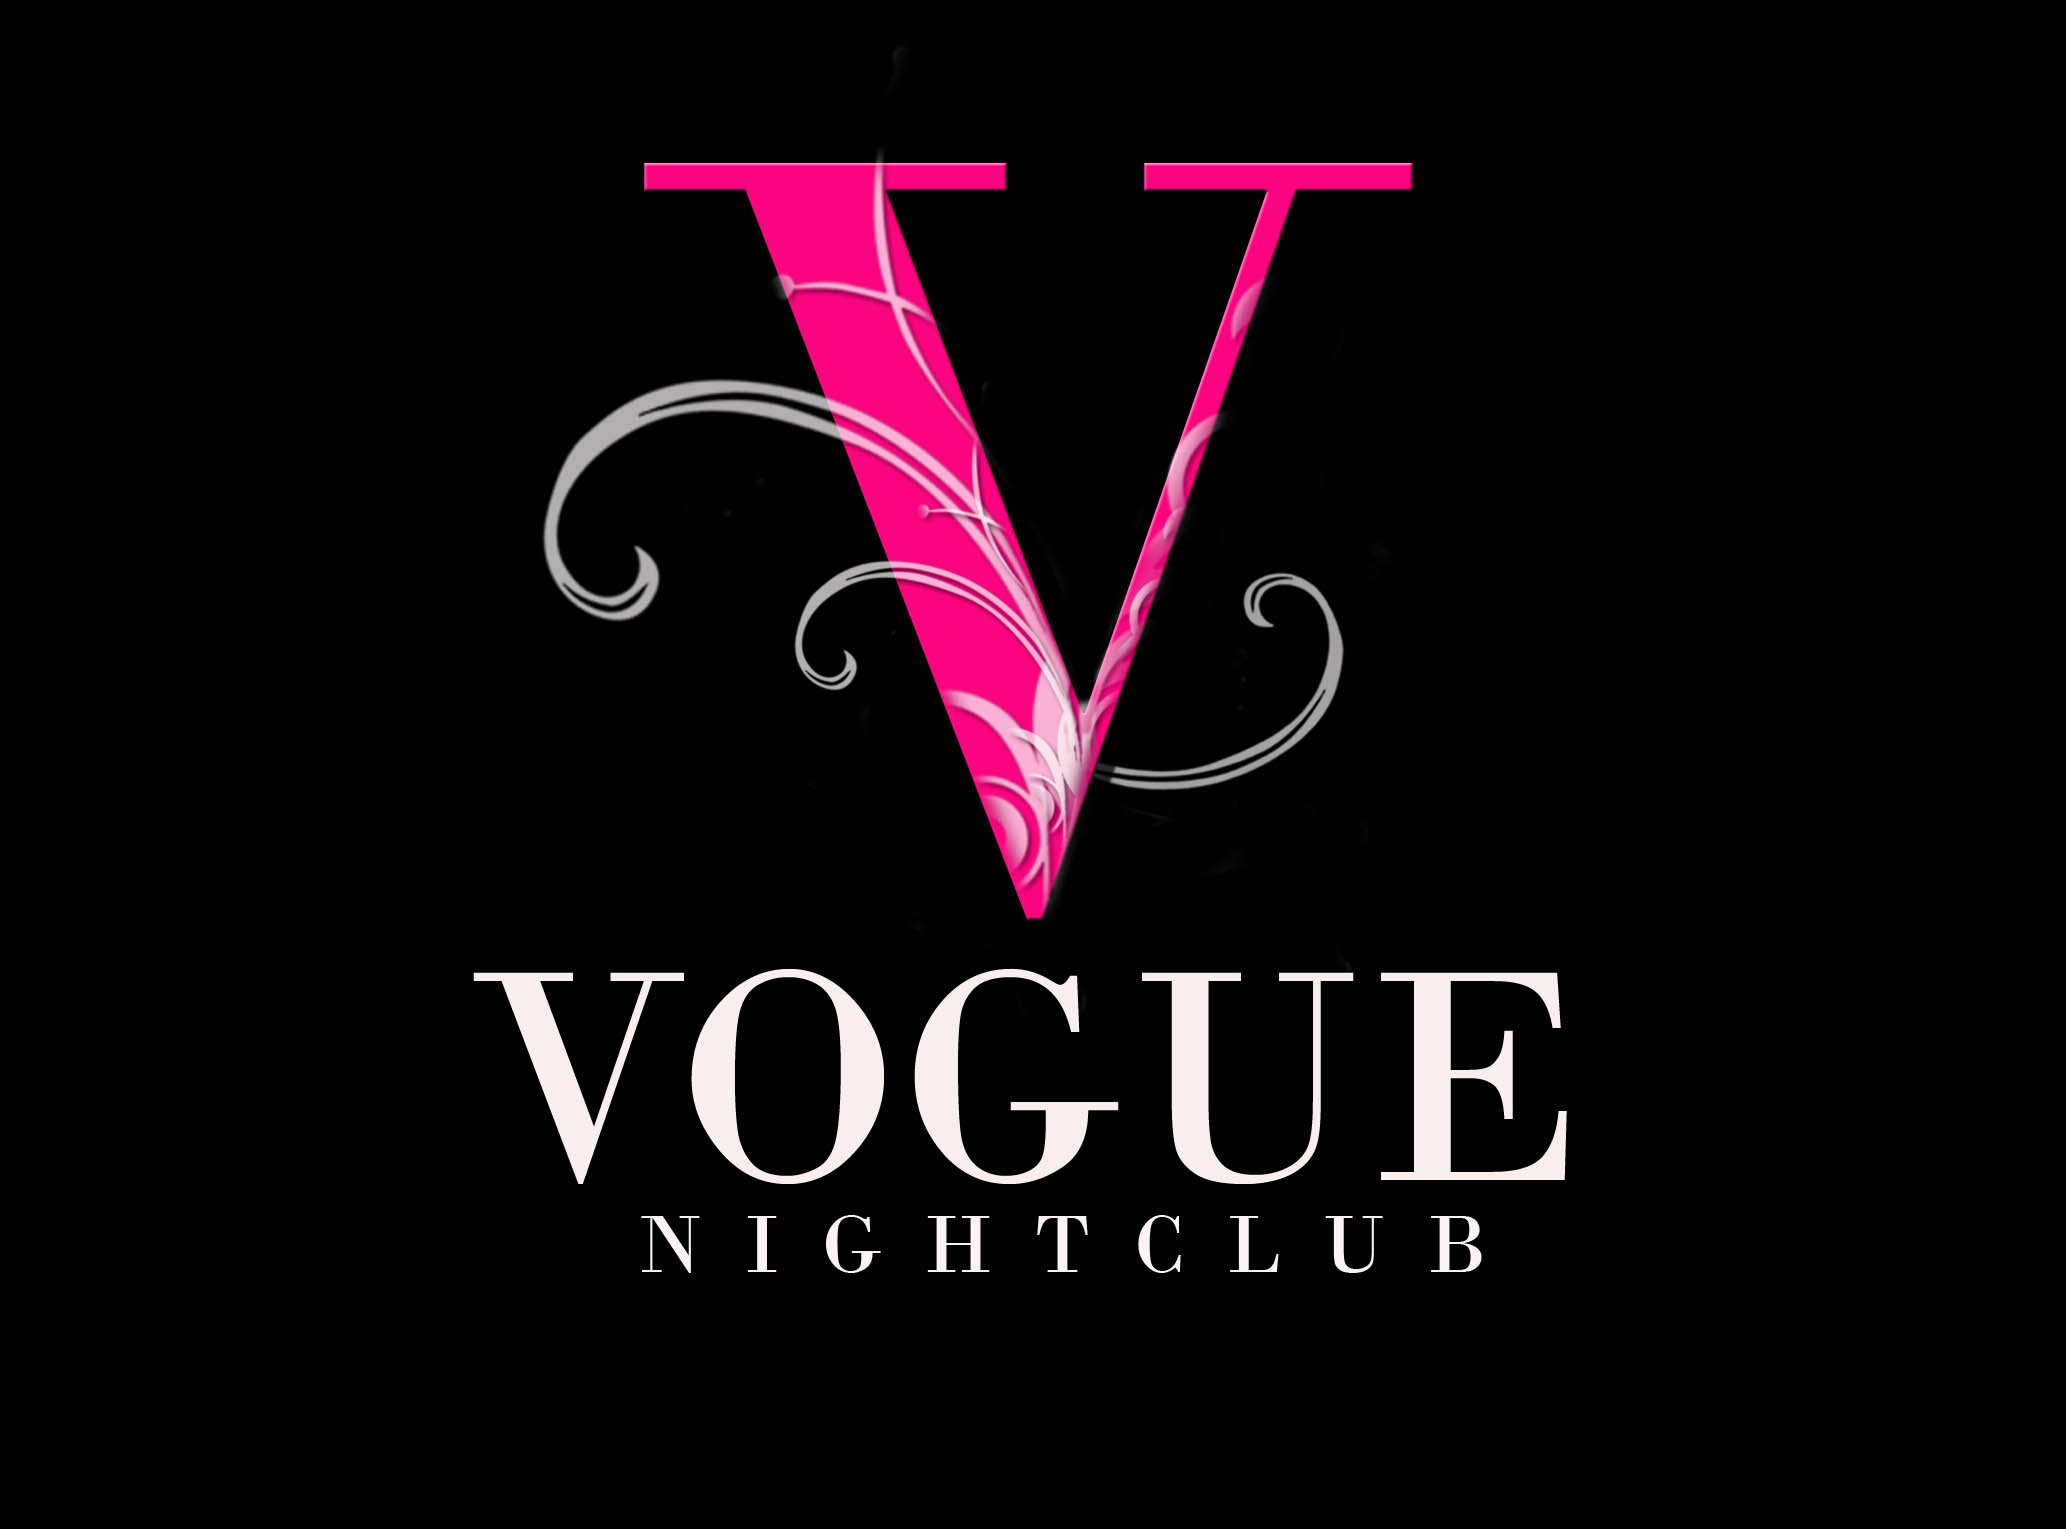 Live at Vogue Nightclub (December 2012)